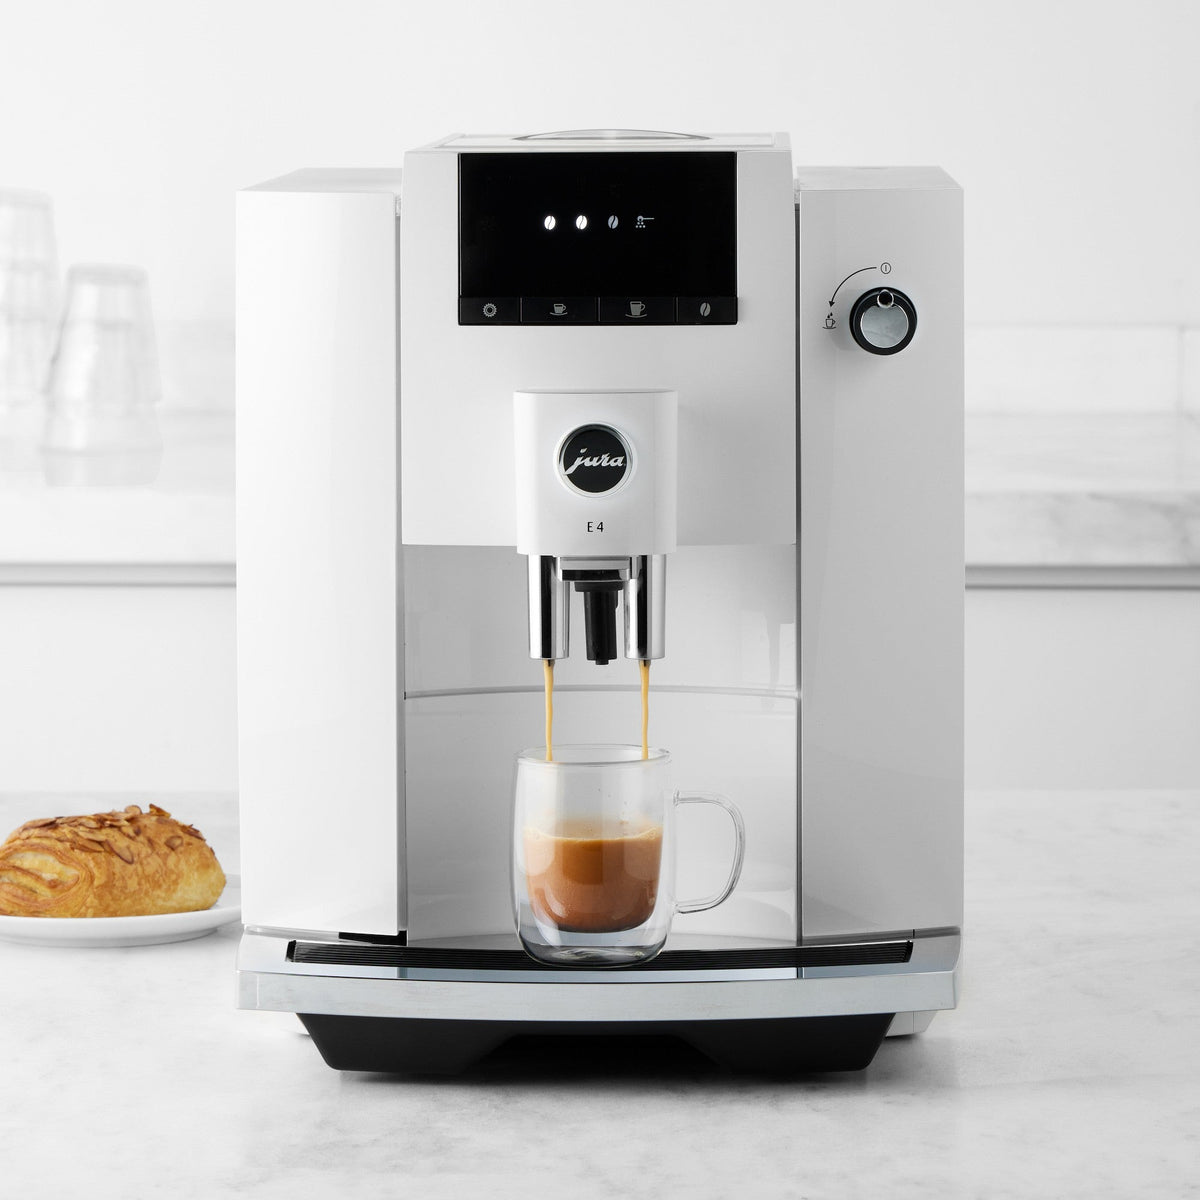 – Espresso Tarzianwestforhousewares Automatic JURA Fully E4 Machine